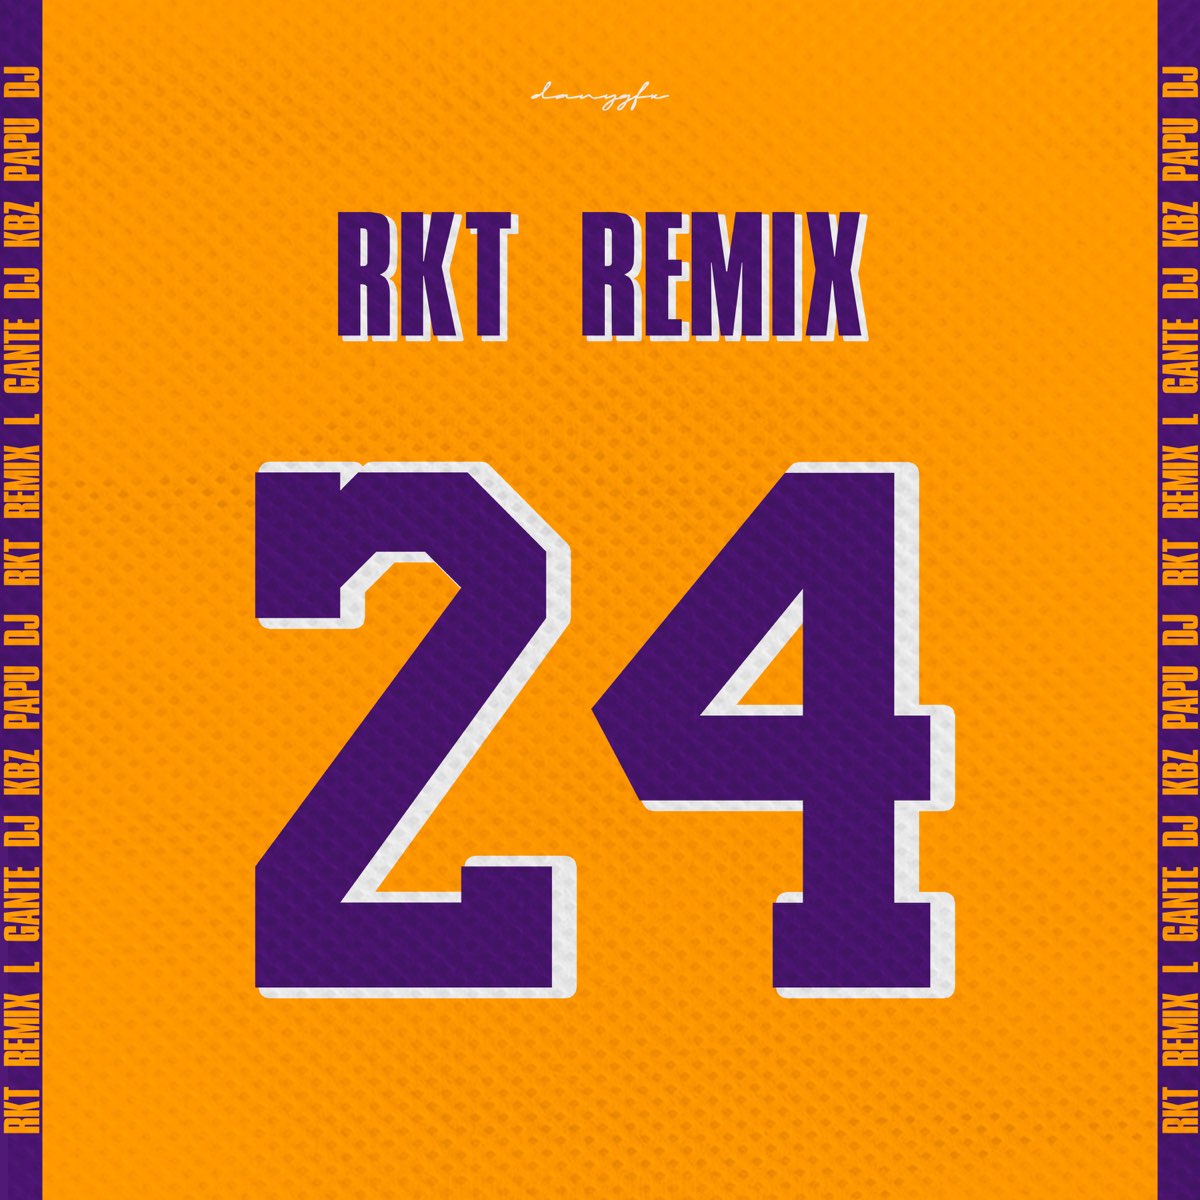 L Gante Rkt Remix Feat Papu Dj L Gante Single By Dj Kbz On Apple Music